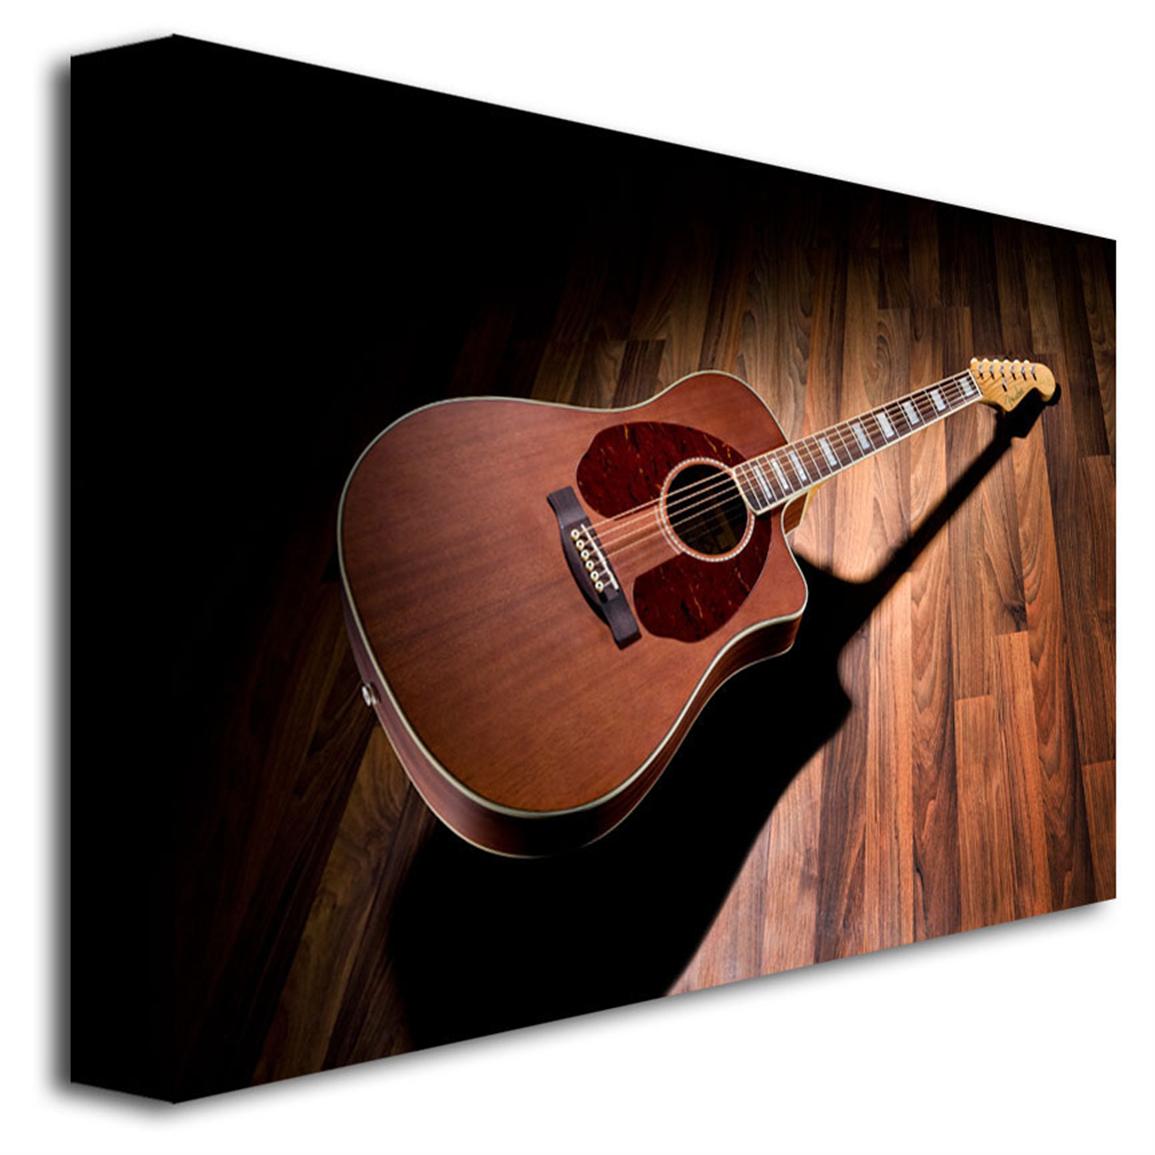 Fender® 'Acoustic Guitar' Canvas Art 300921, Wall Art at